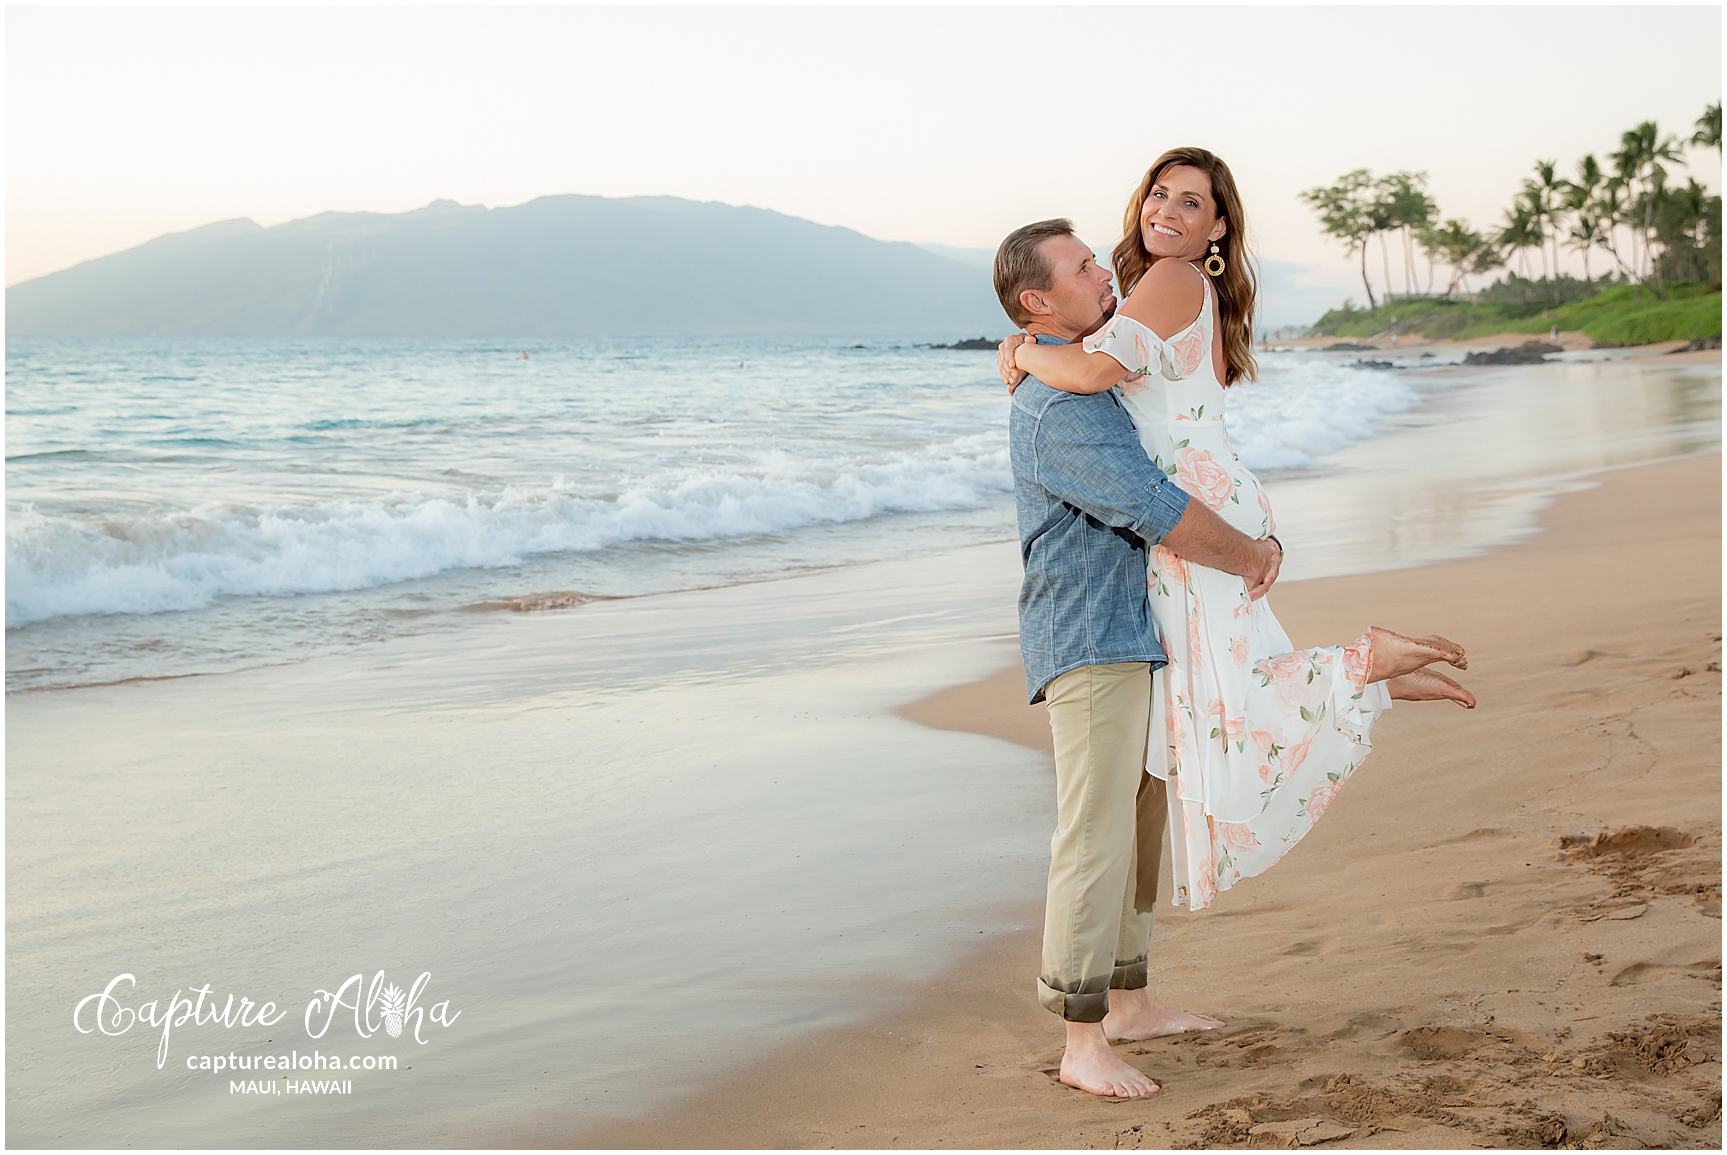 Maui Couples Photography at Mokapu Beach, Maui at sunset with couple on the beach